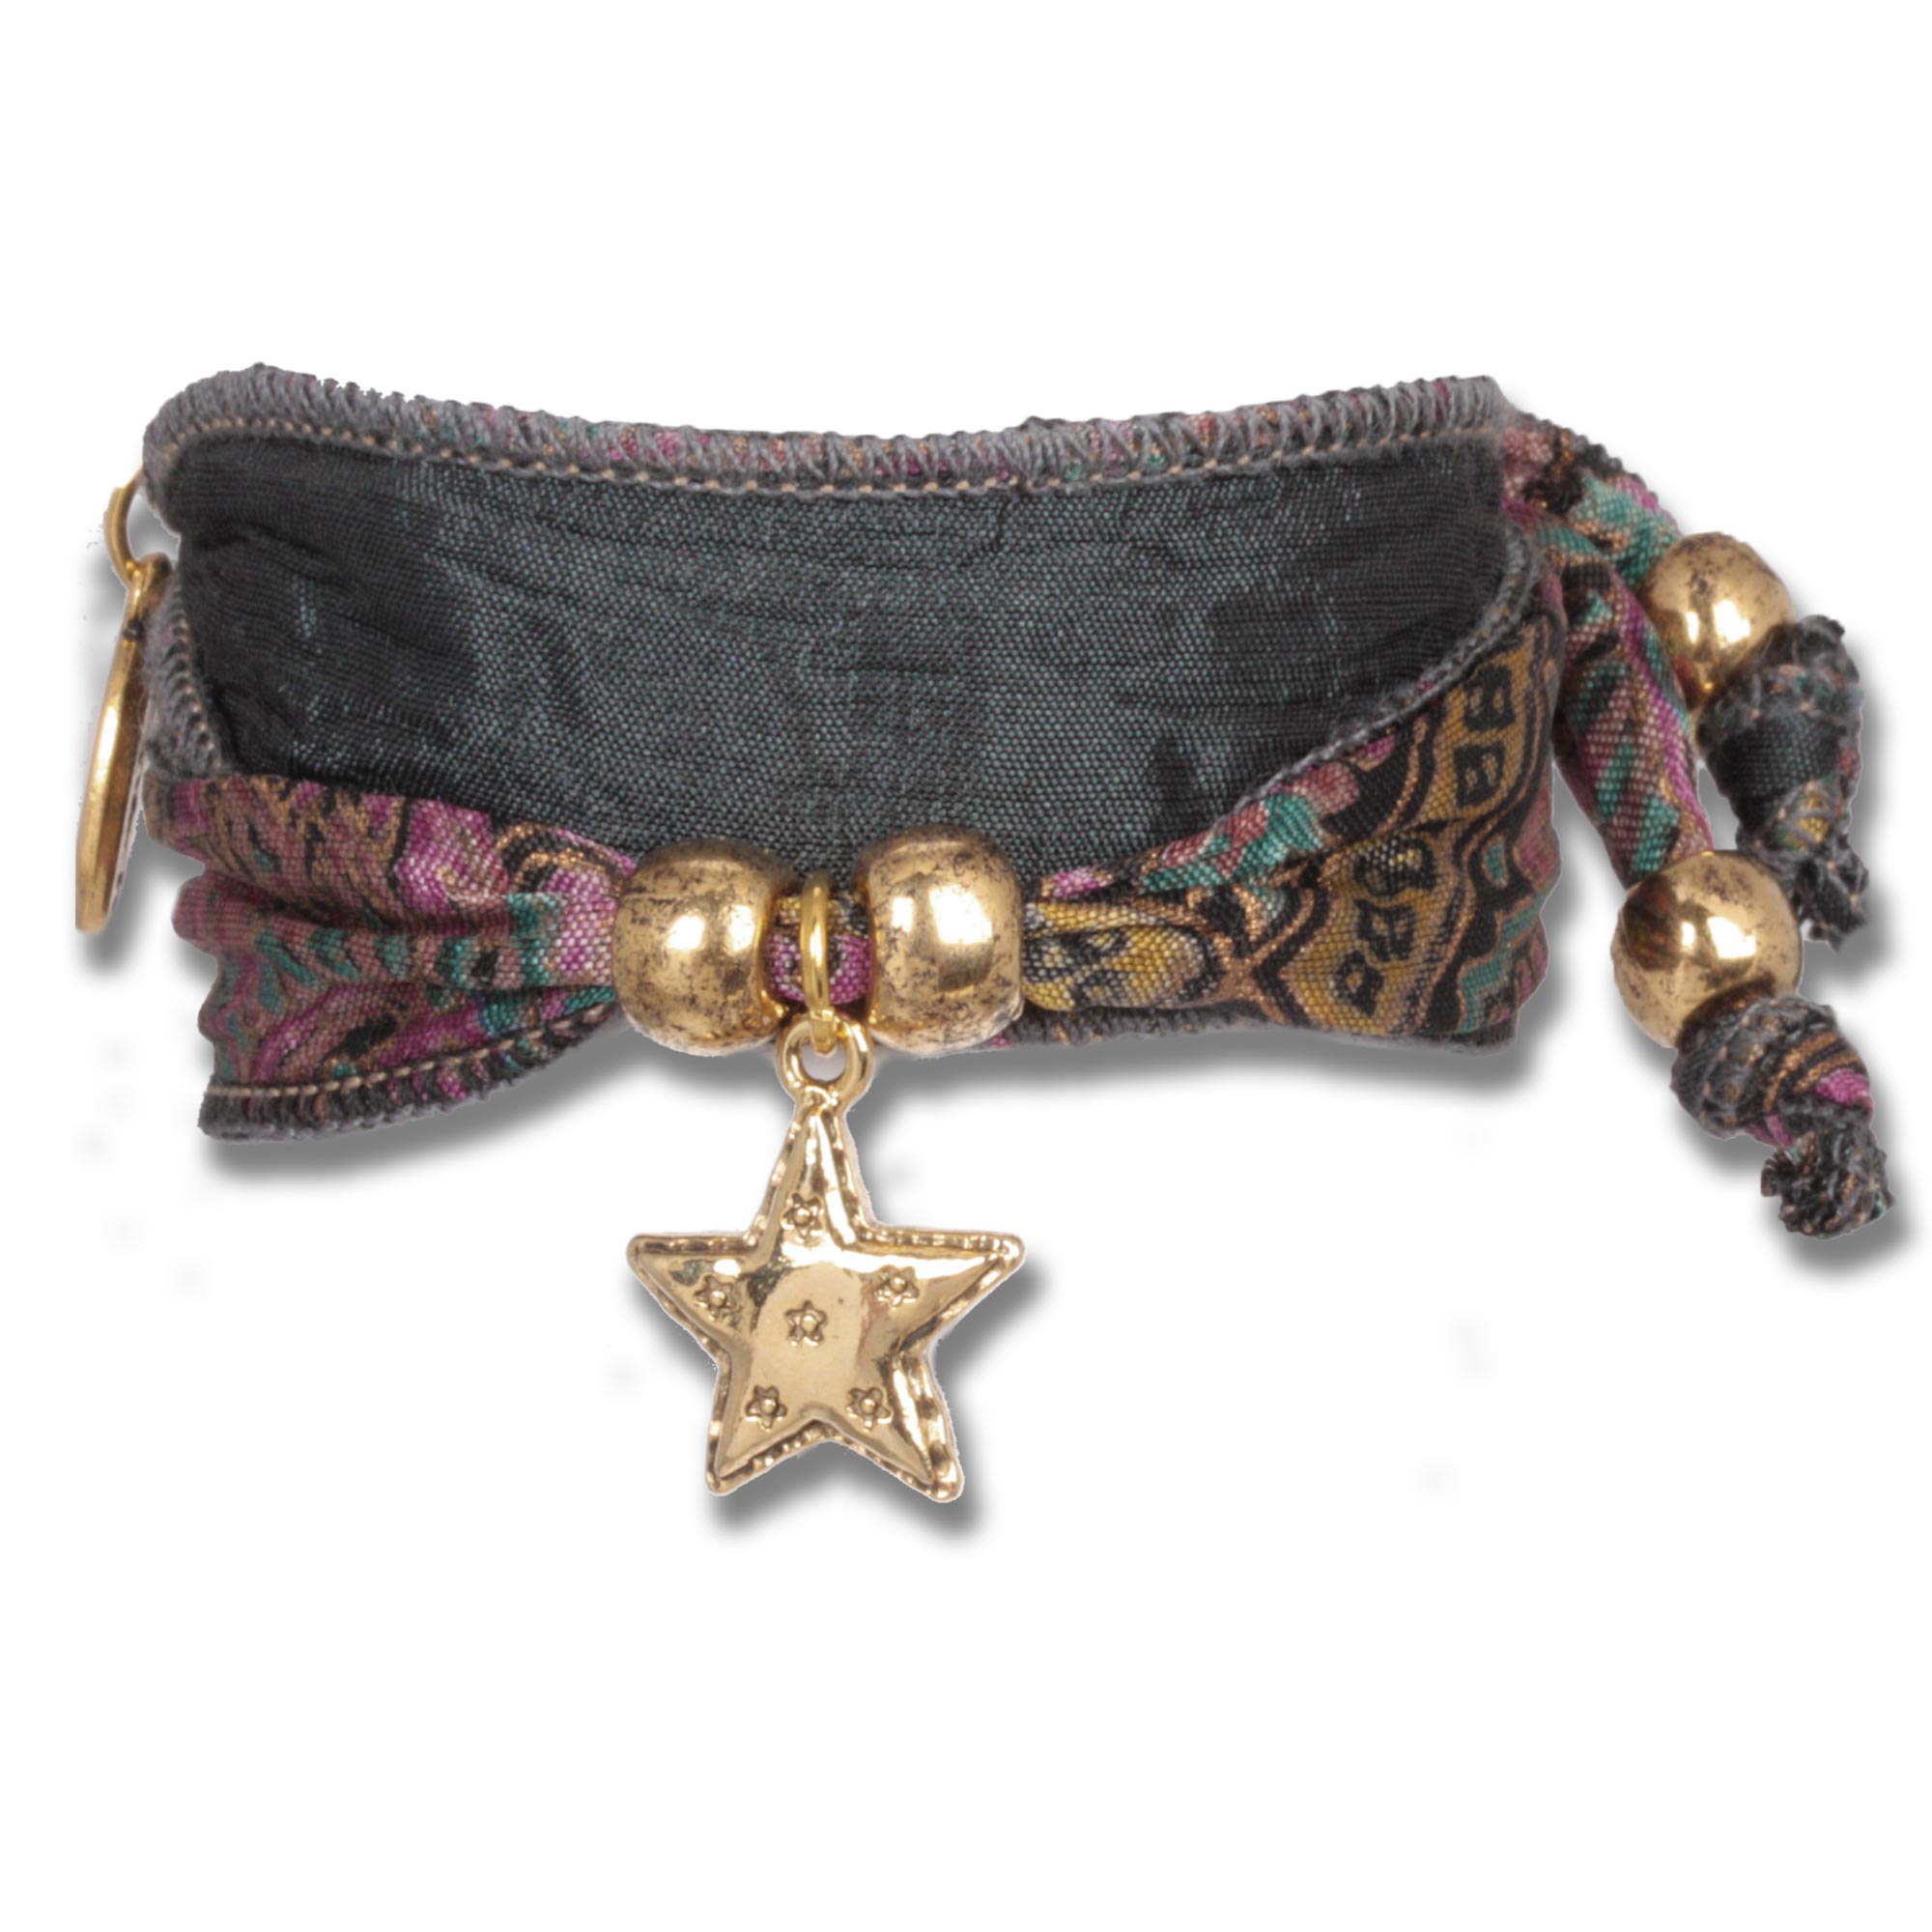 Indian-Black Starseed - Vintage Indian sari fabric bracelet